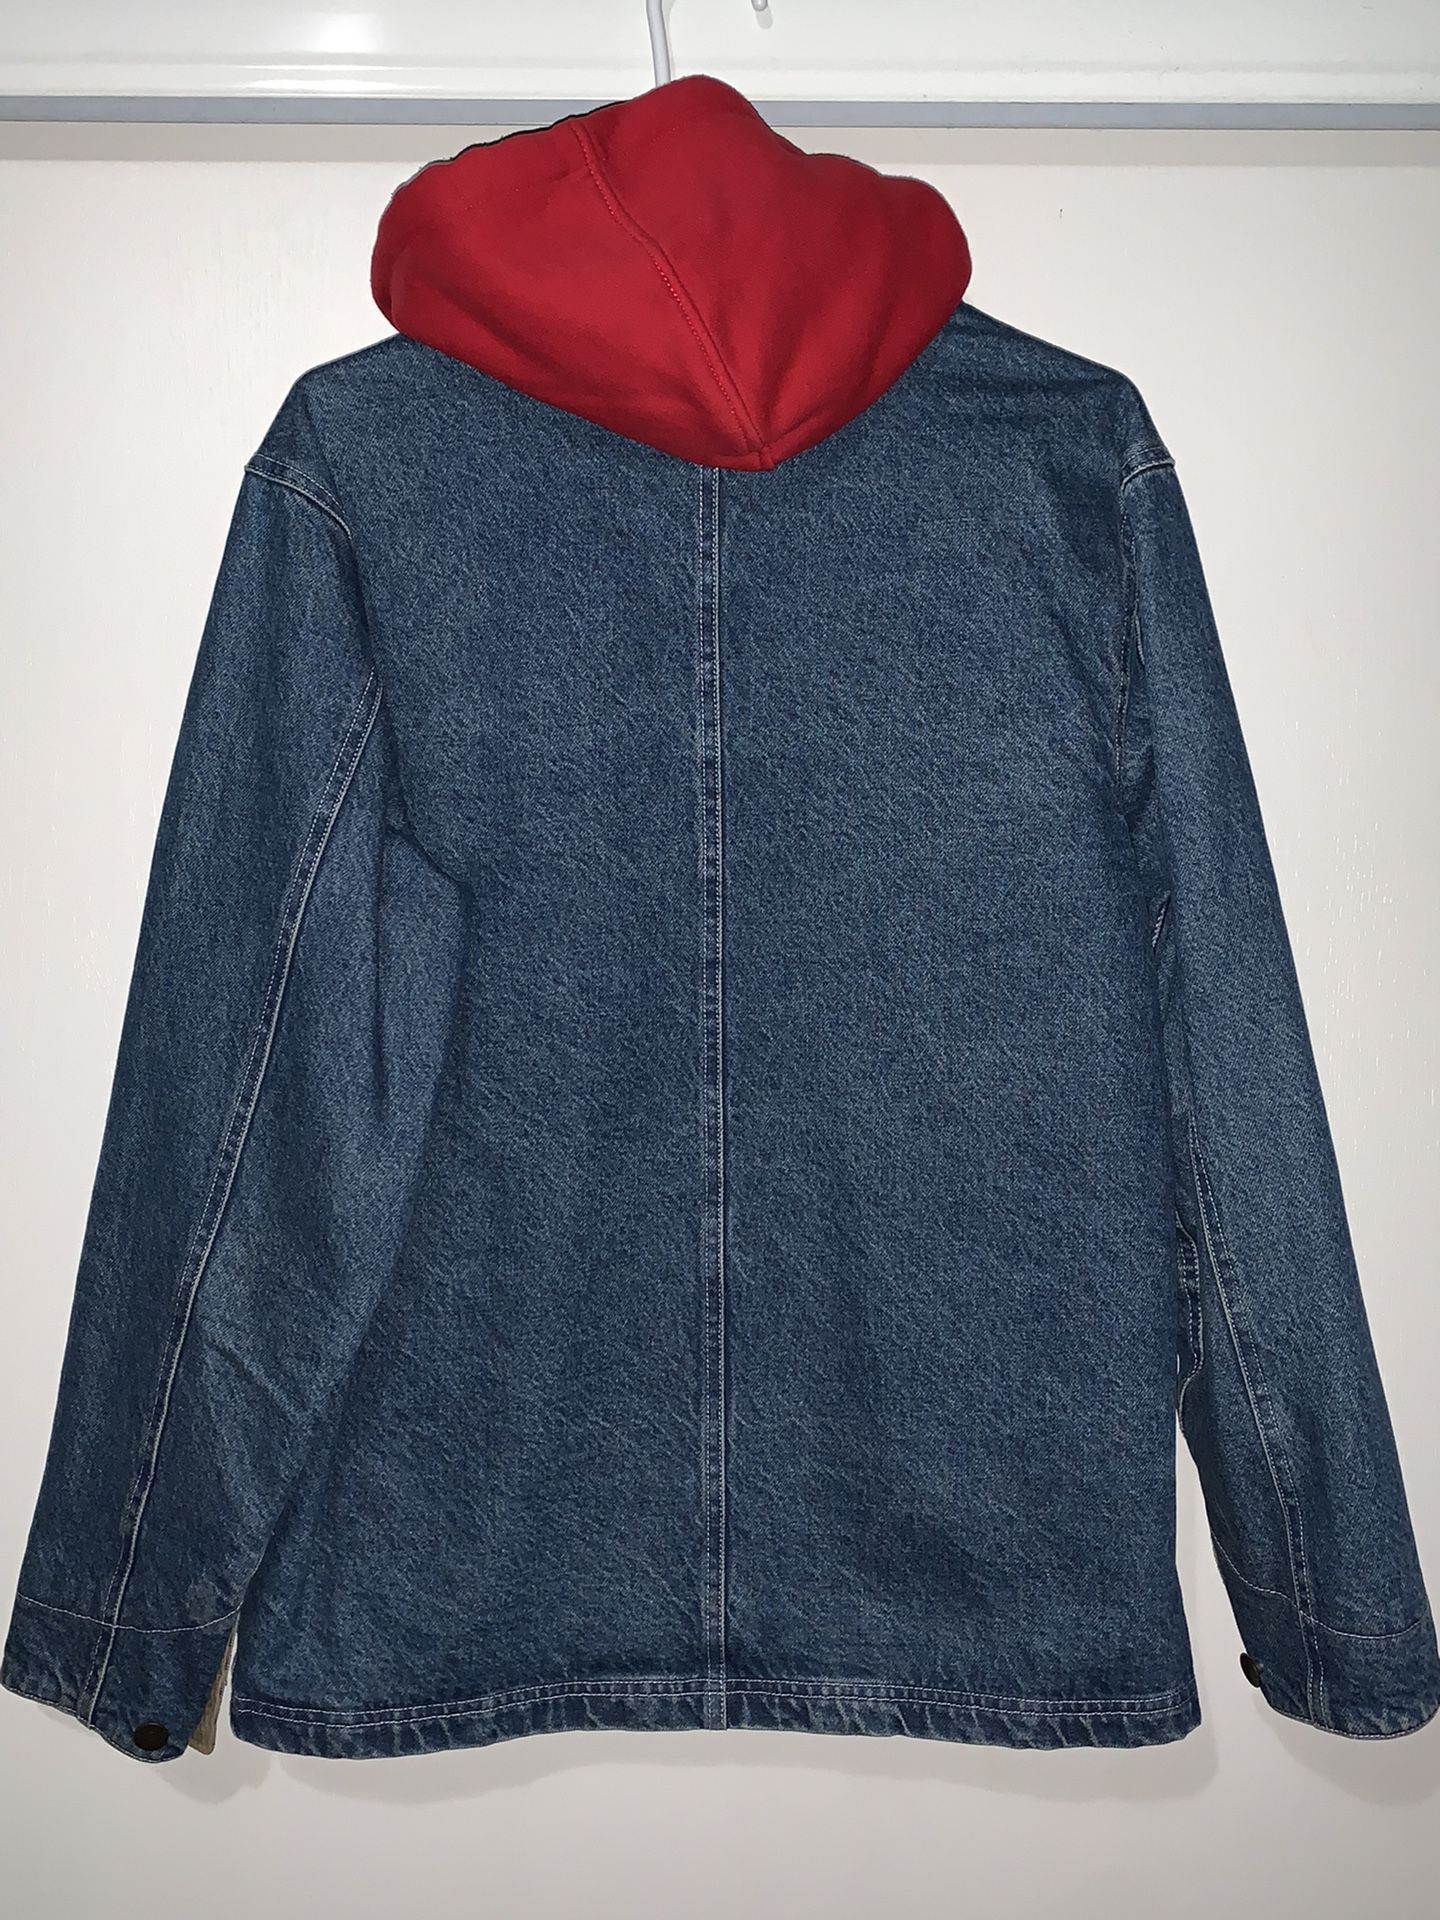 Supreme Hooded Chore Coat for Sale in Glendora, CA - OfferUp